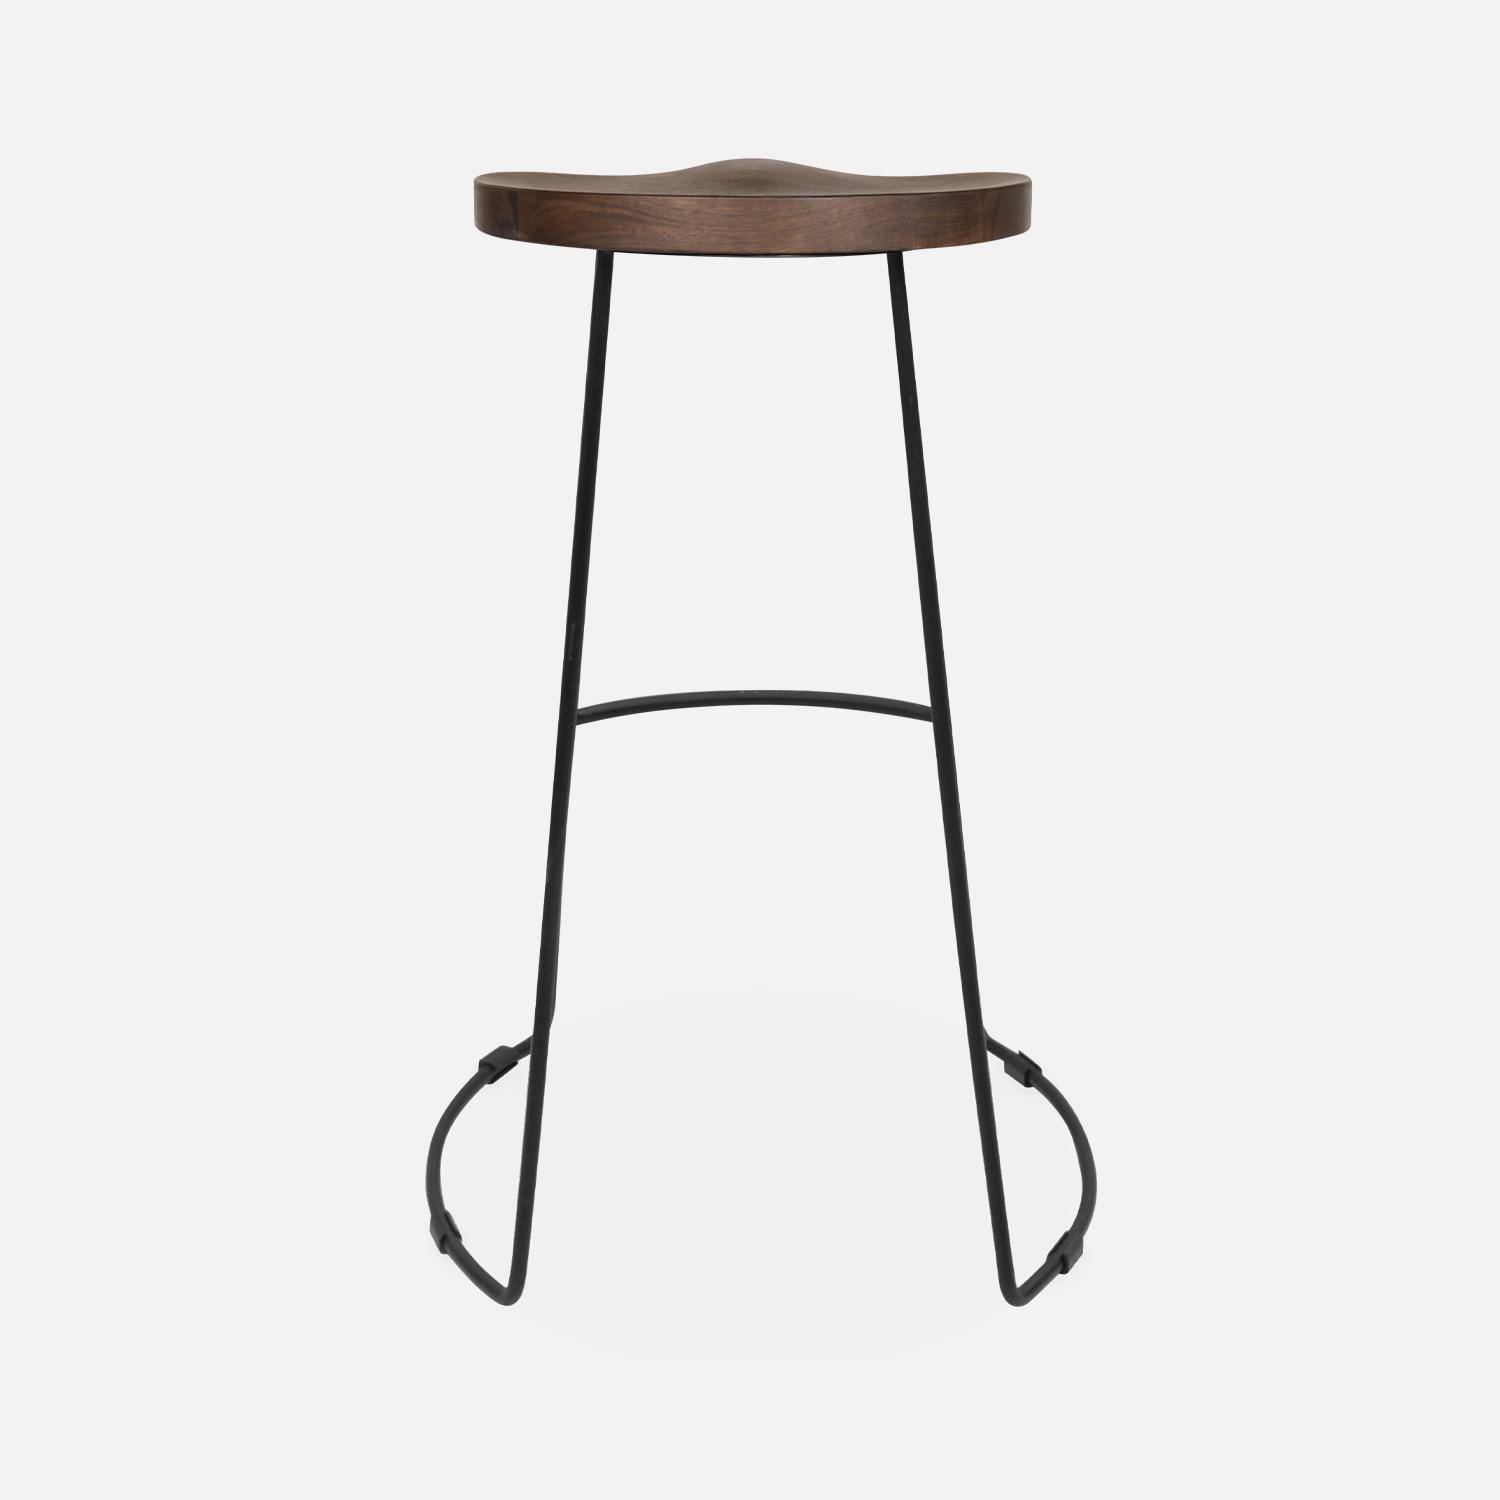 Set of 4 industrial metal and wooden bar stools, 47x40x75cm, Jaya, Light Walnut, Mango wood seat, black metal legs Photo6